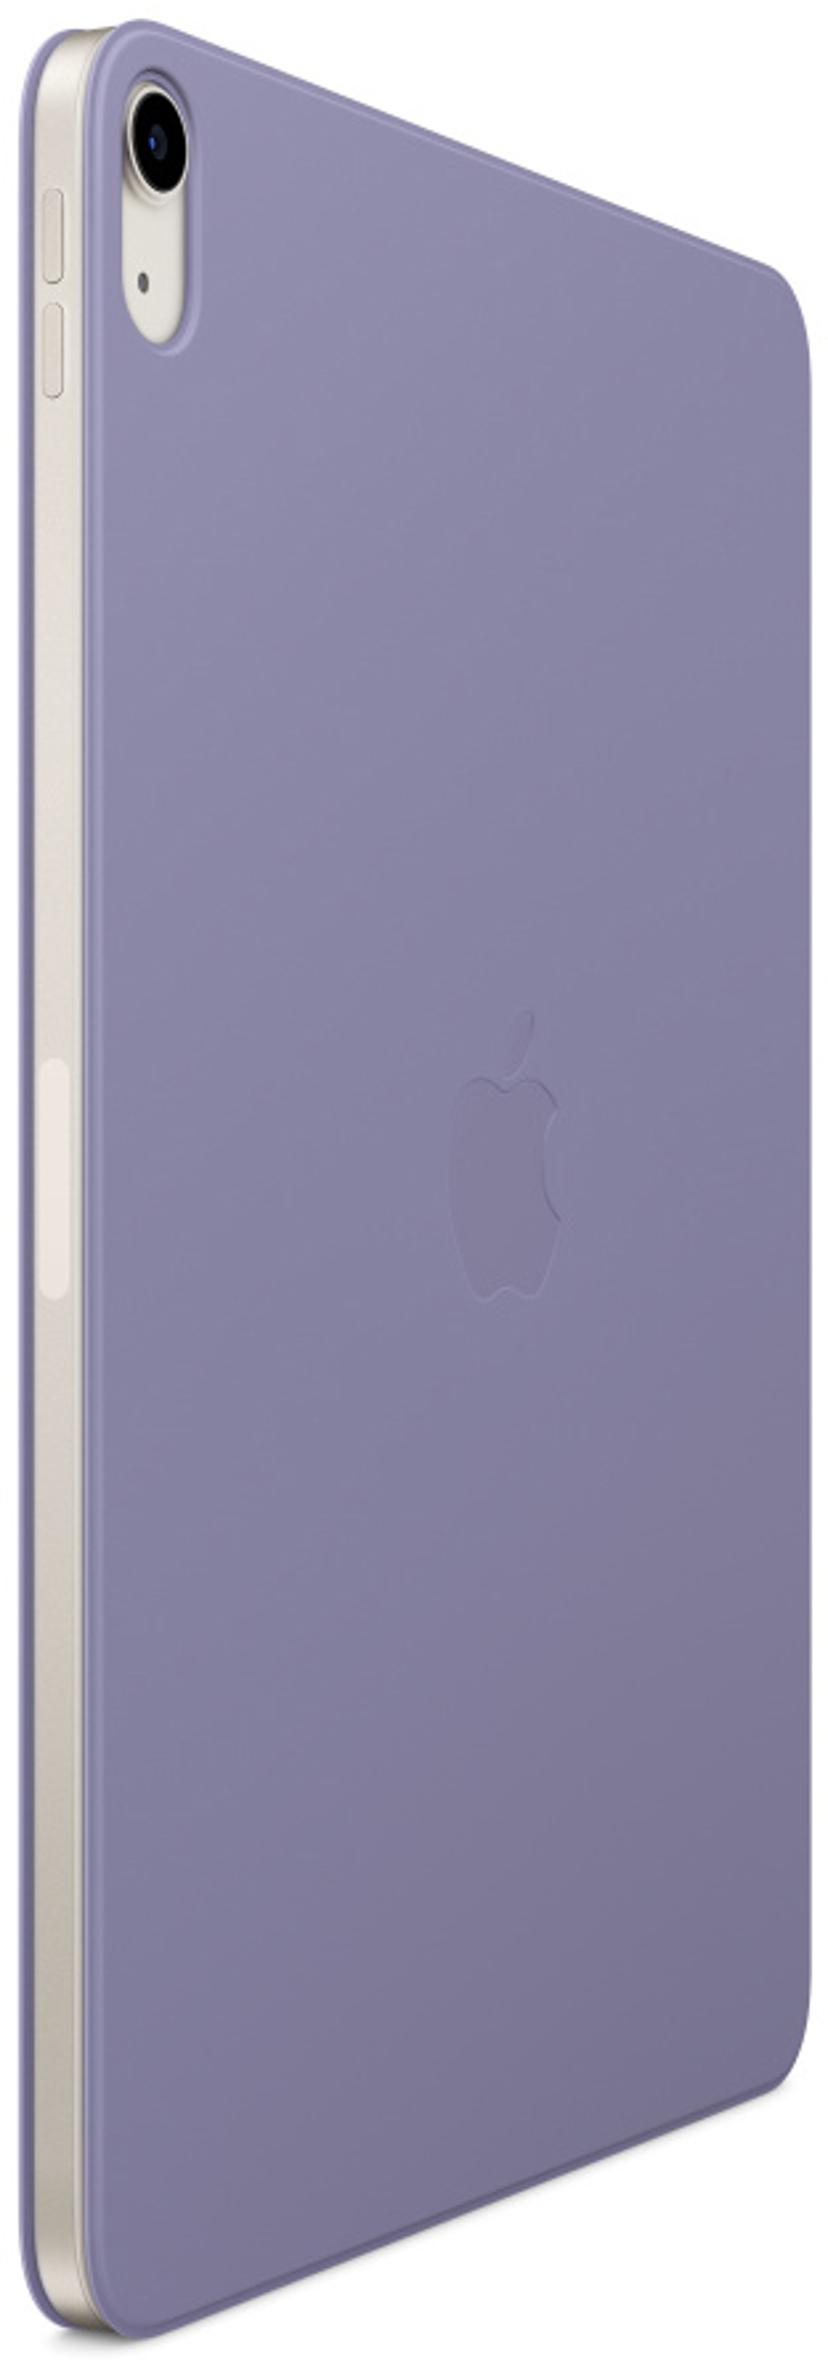 Apple Smart Folio iPad Air (5th generation)
iPad Air (4th generation) Laventeli